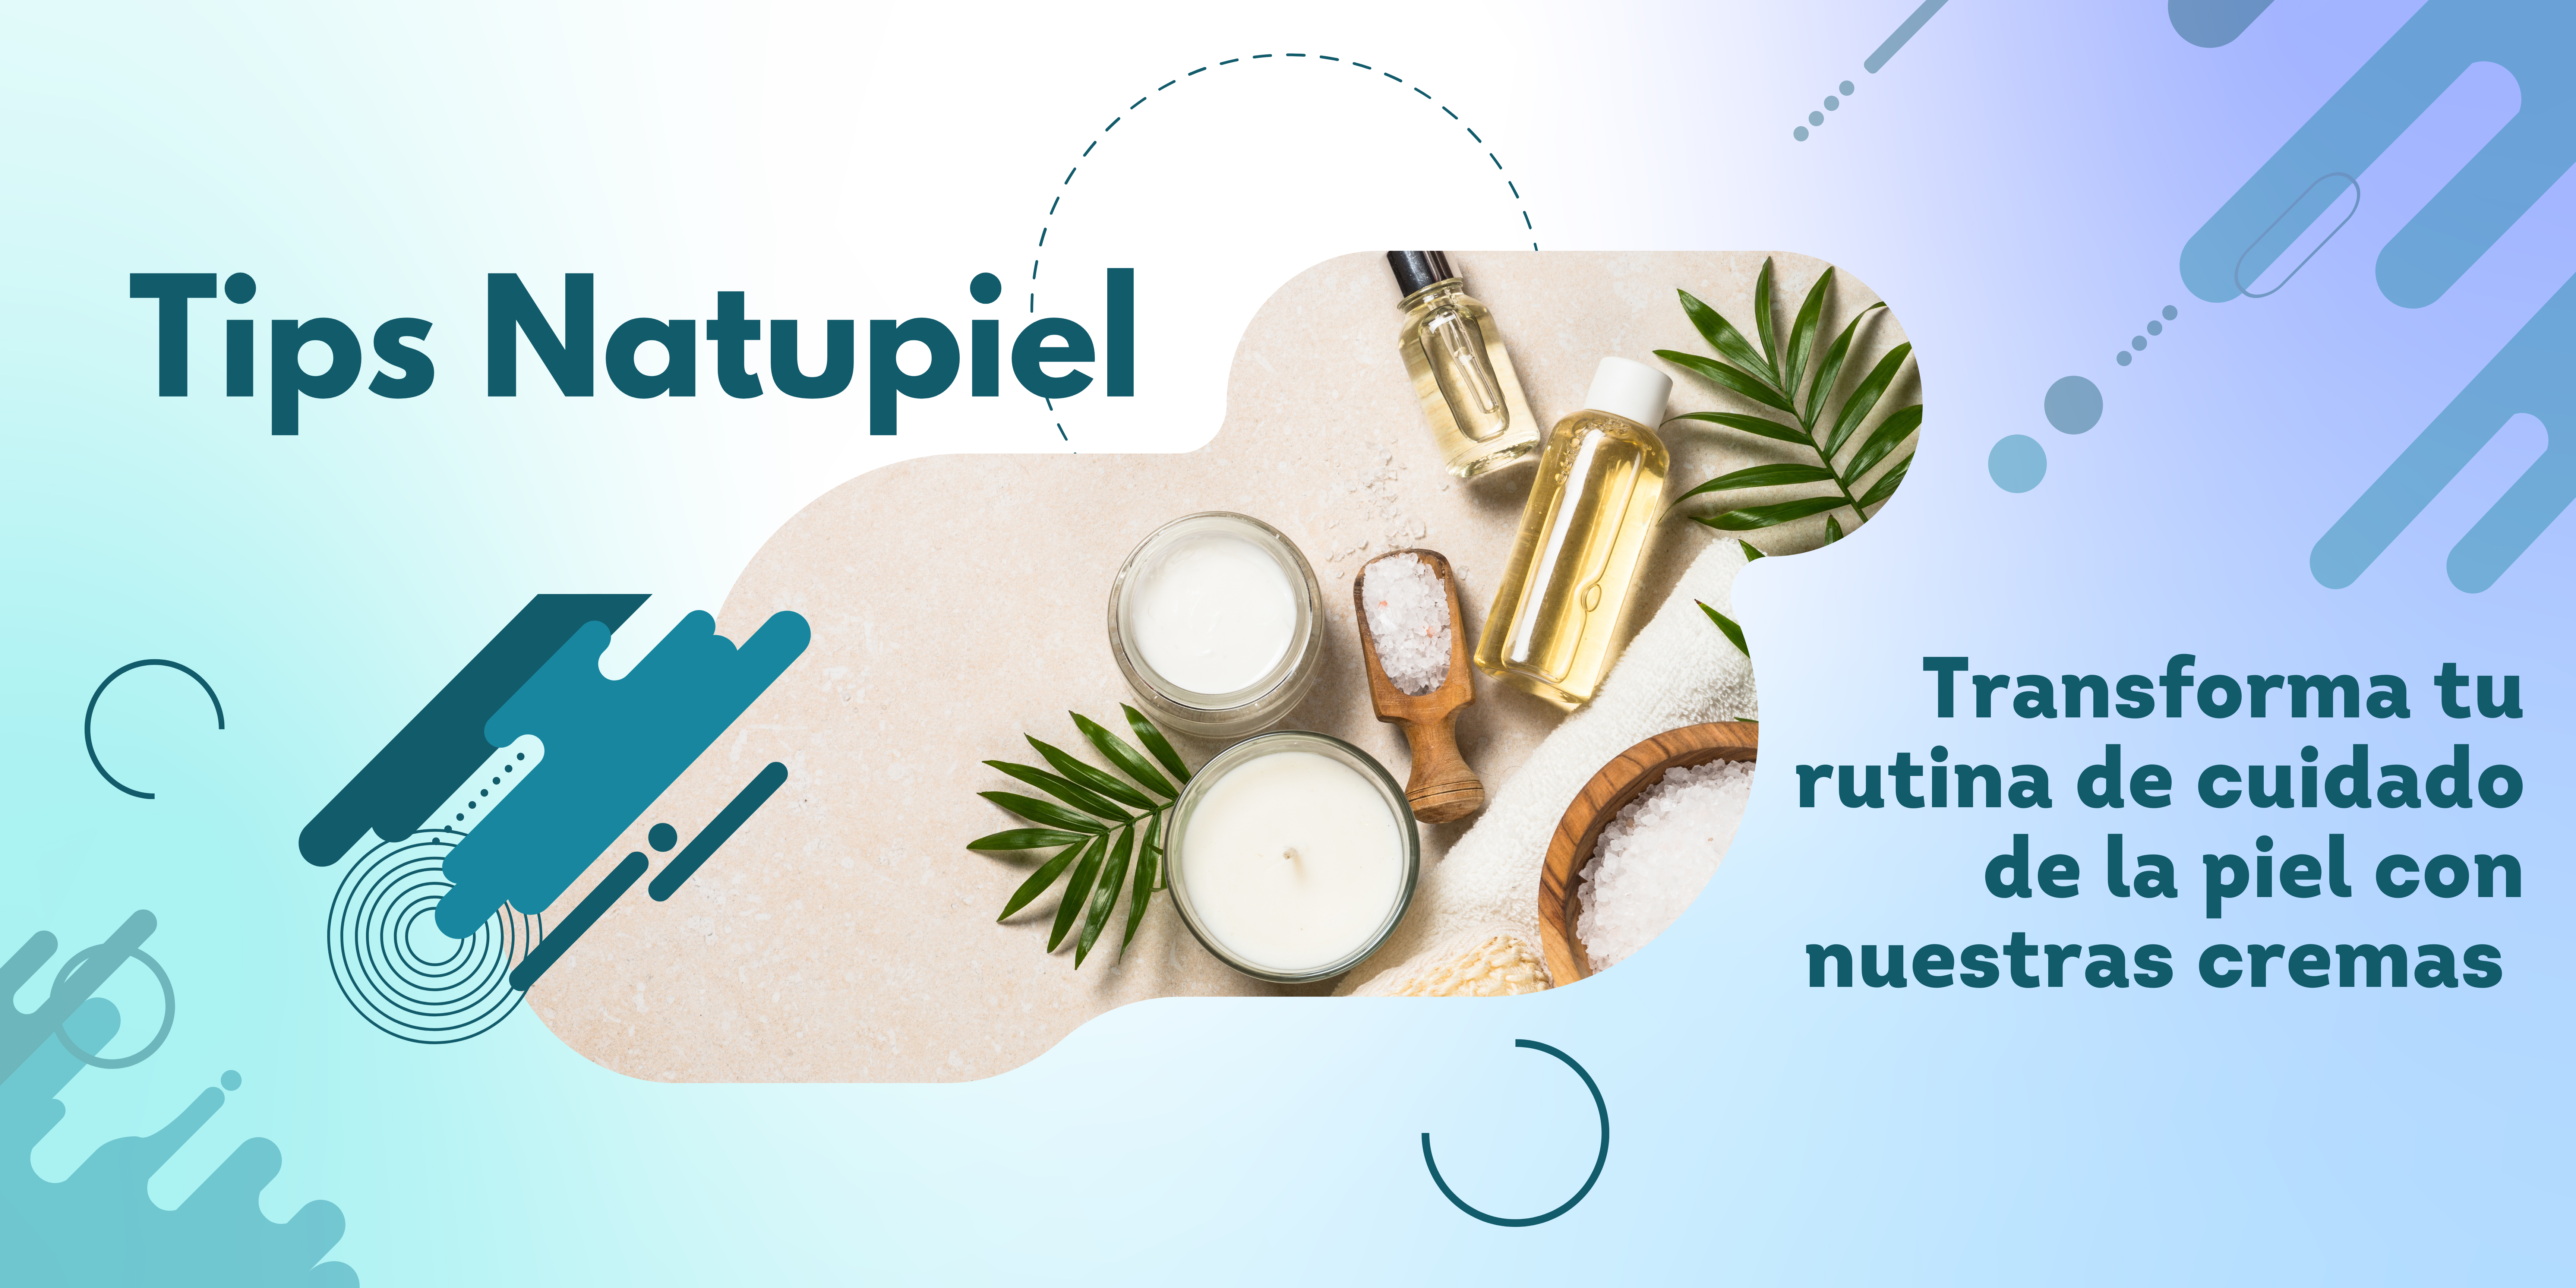 Tips Natupiel - Rutina de cuidado de piel - Medium Banner